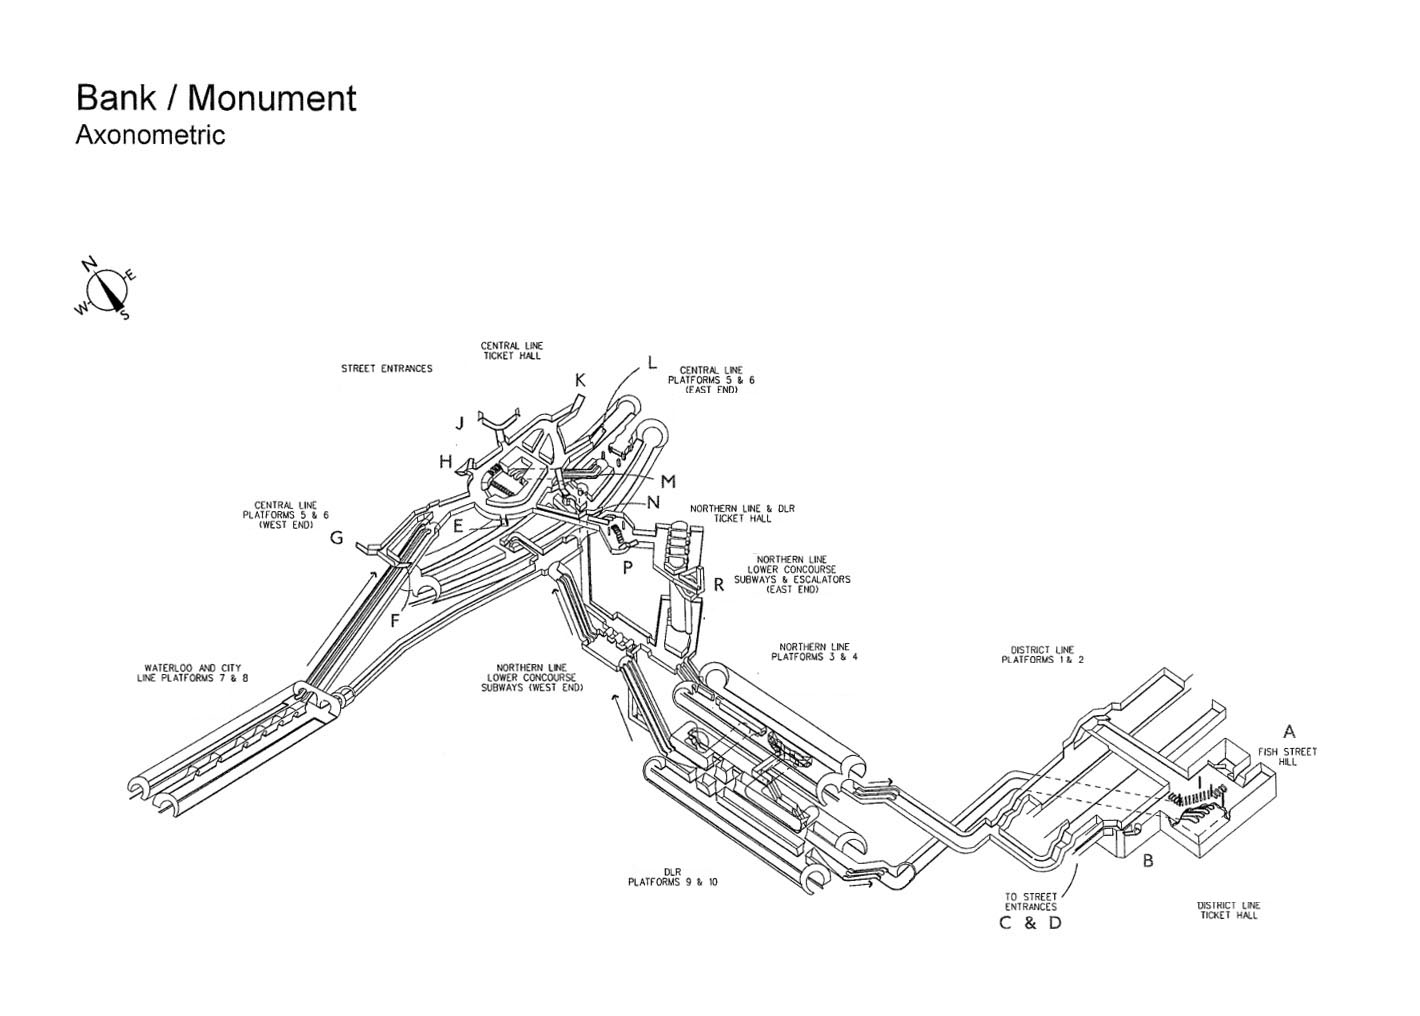 diagramme-3d-station-metro-londres-bank-monument-04